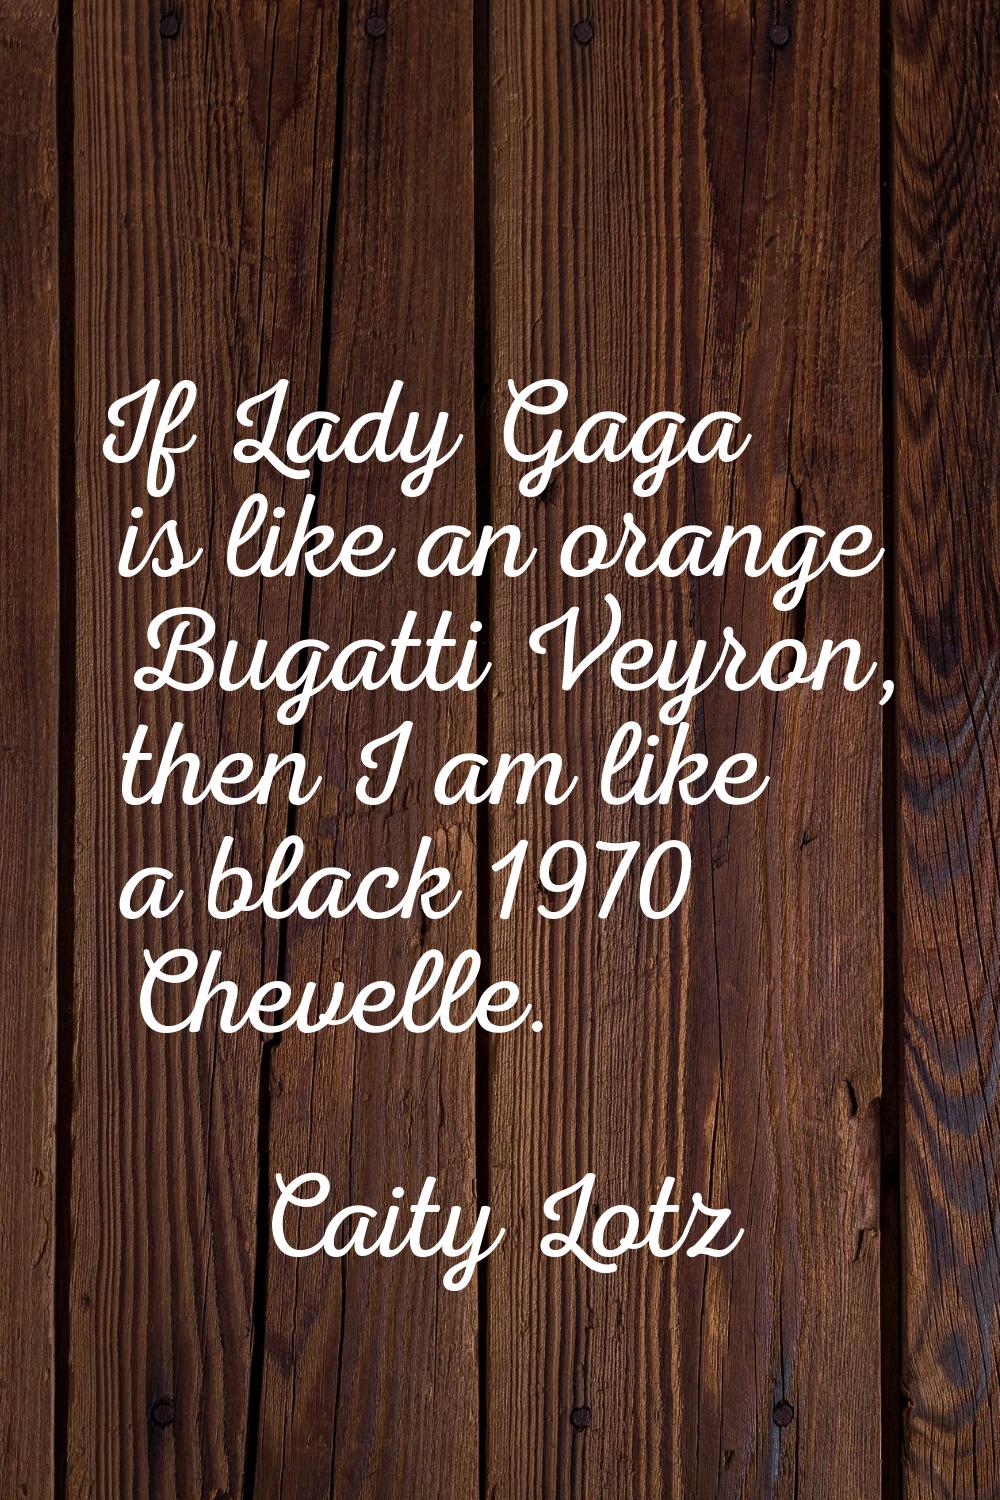 If Lady Gaga is like an orange Bugatti Veyron, then I am like a black 1970 Chevelle.